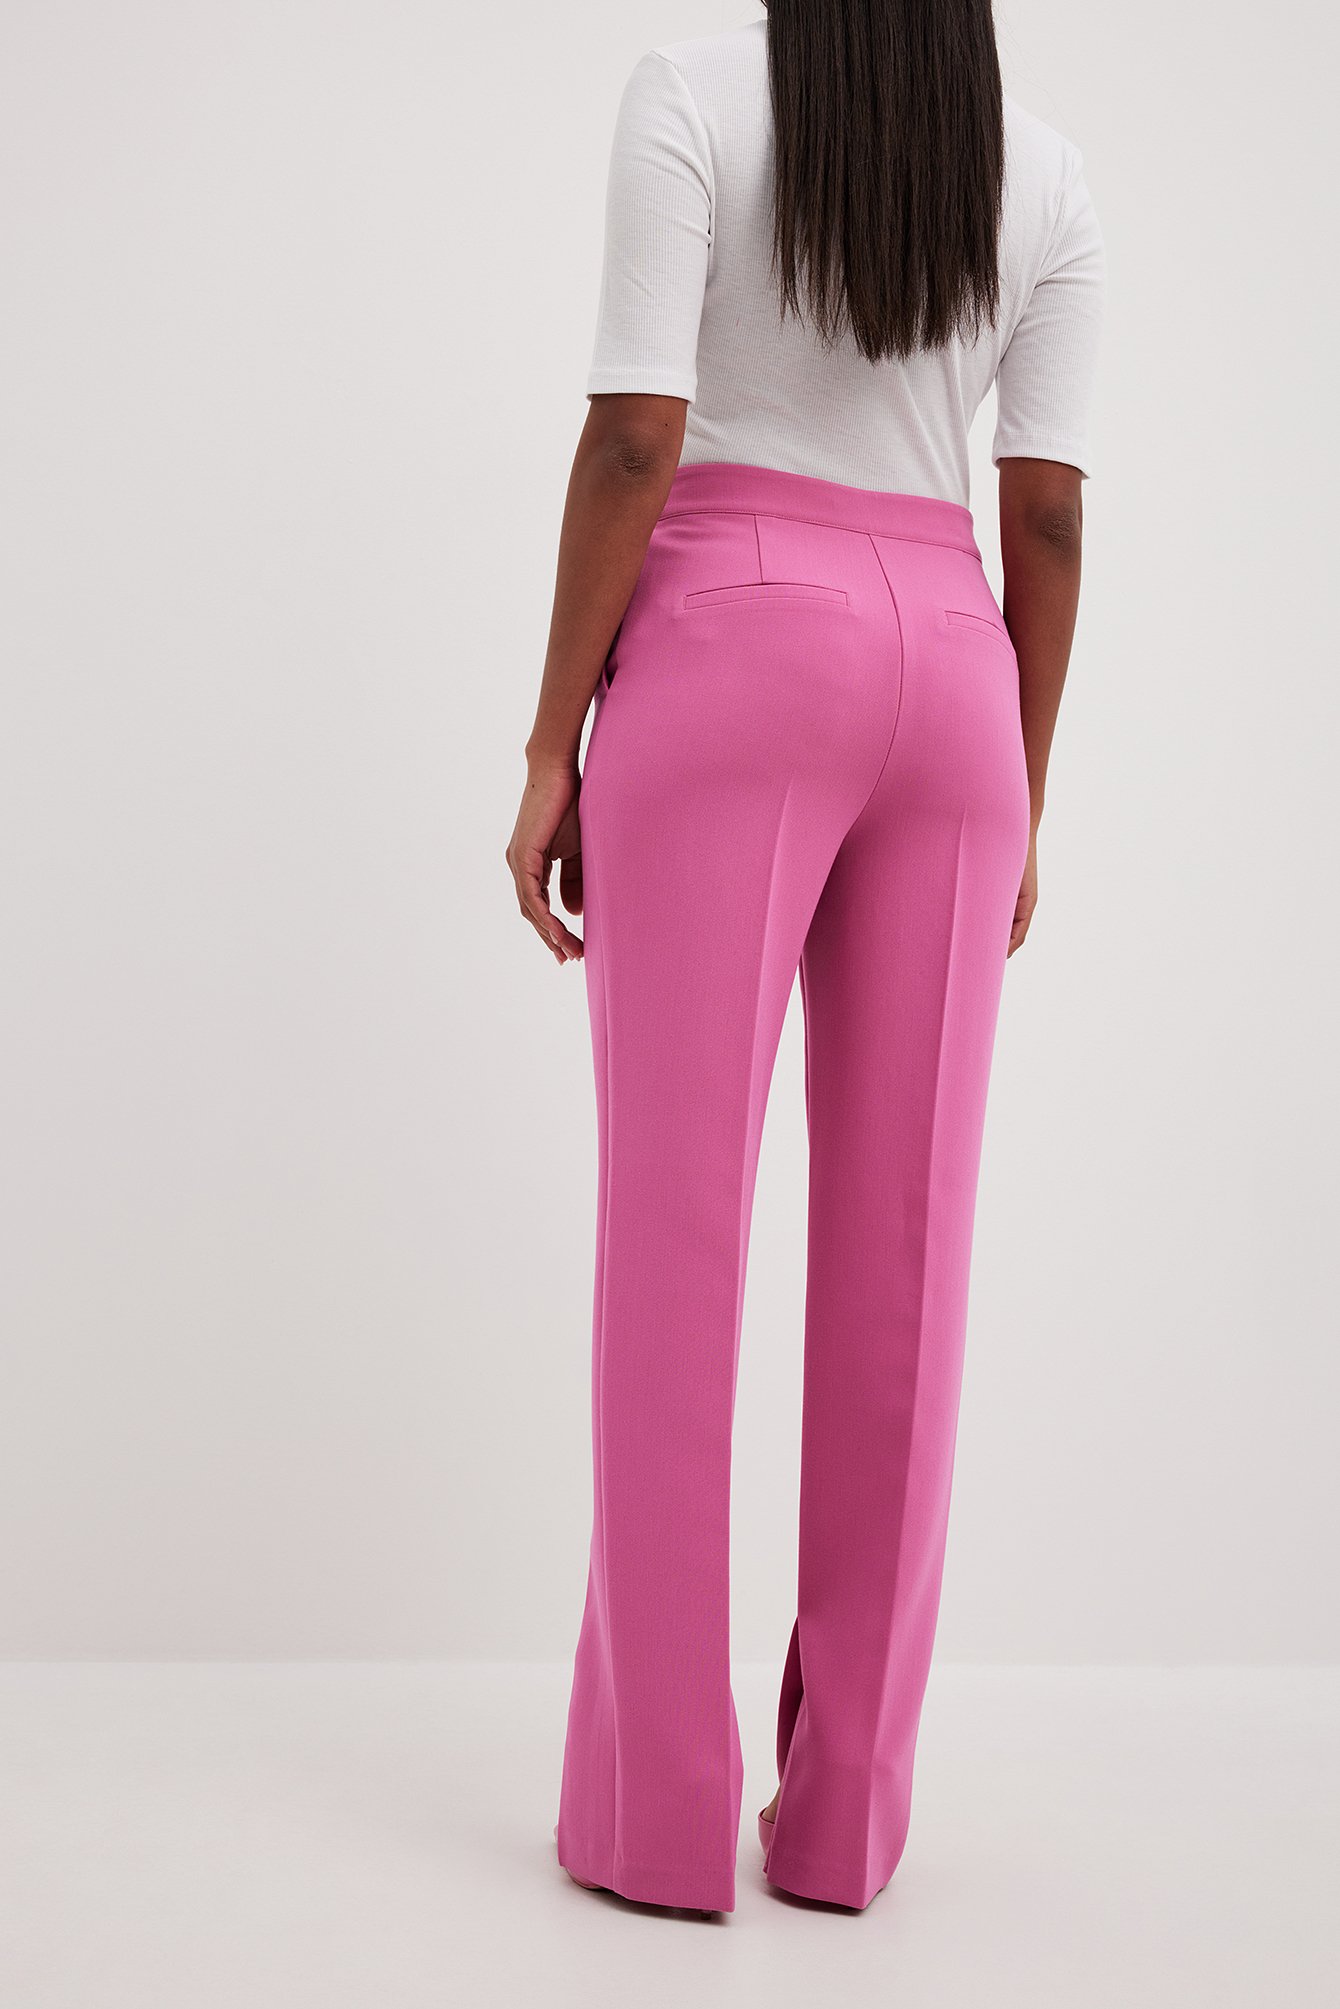 Straight Side Slit Pants Pink